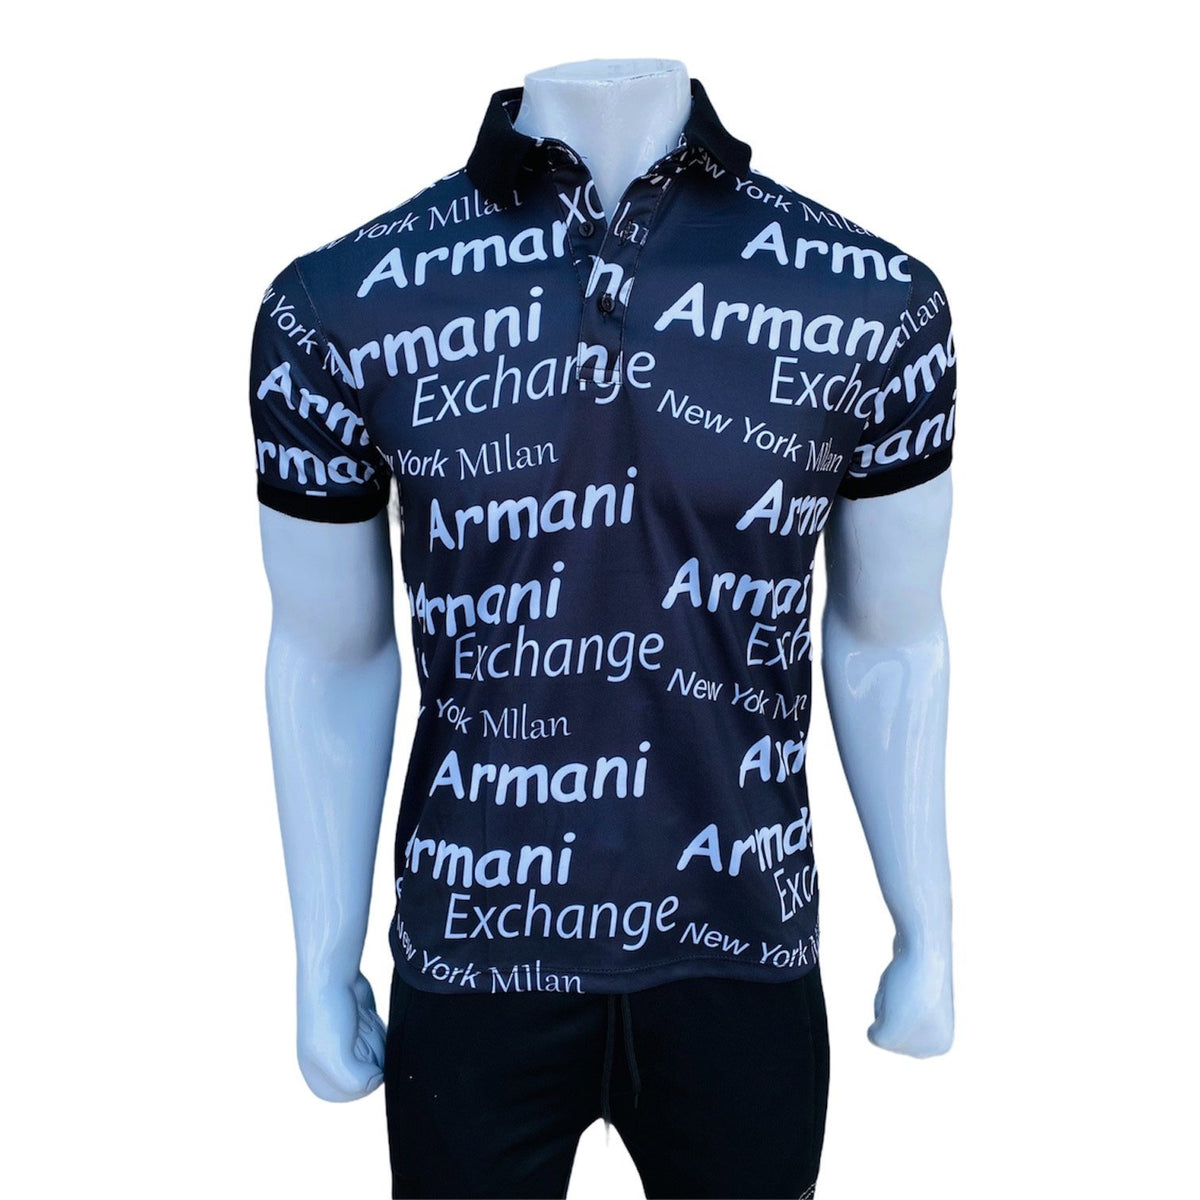 ARM black exclusive polo shirt